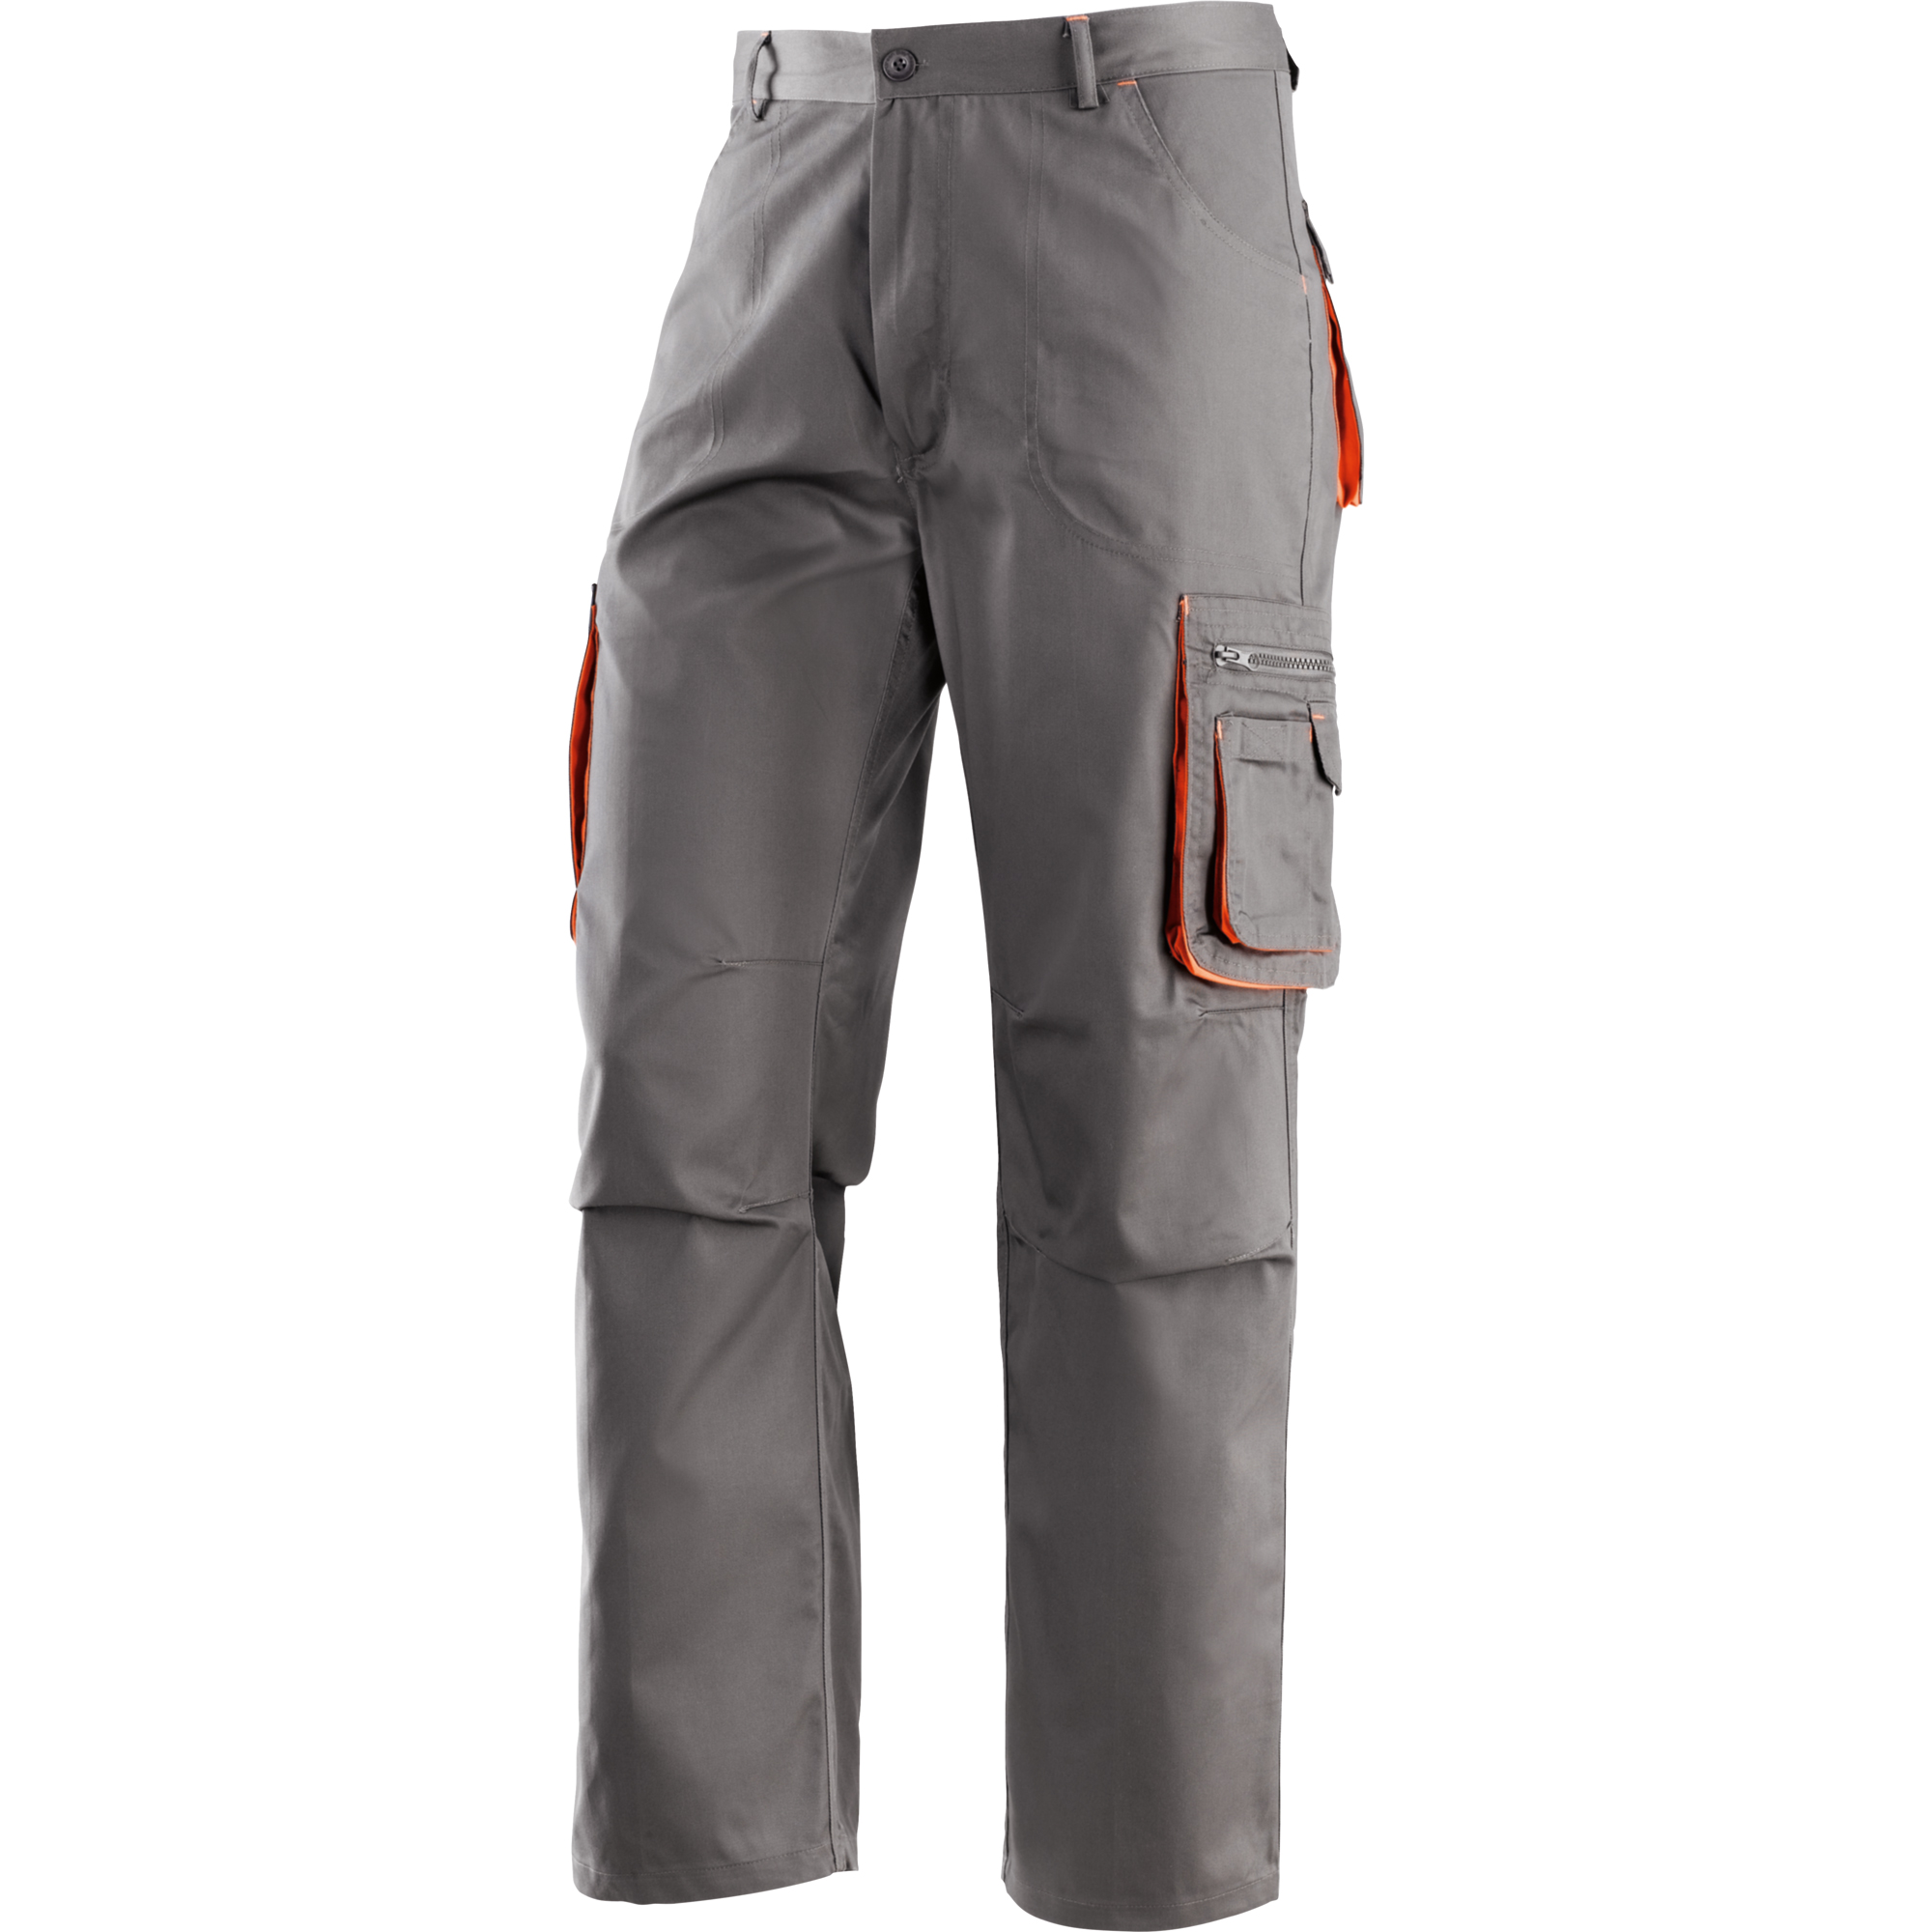 Pantaloni Neri Spa Willis 437085, comfort sul lavoro